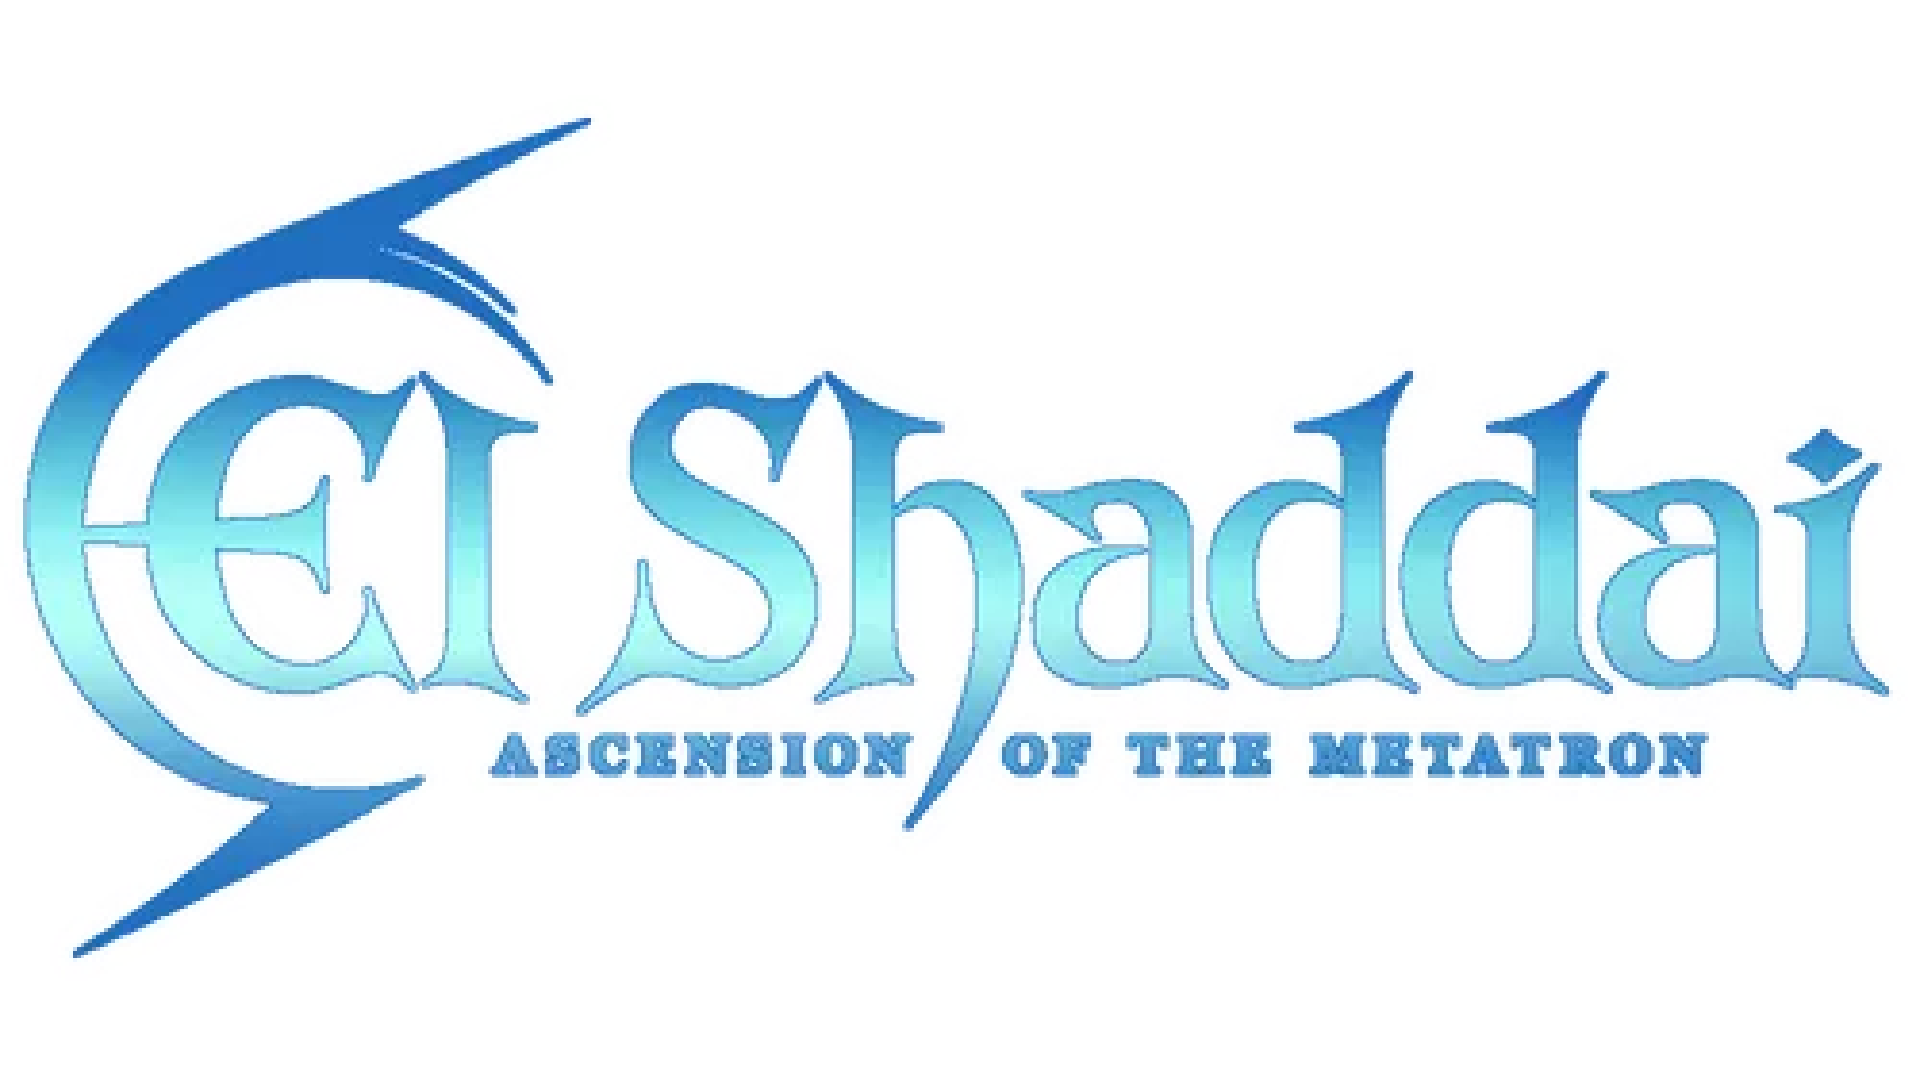 El Shaddai - Ascension of the Metatron Logo